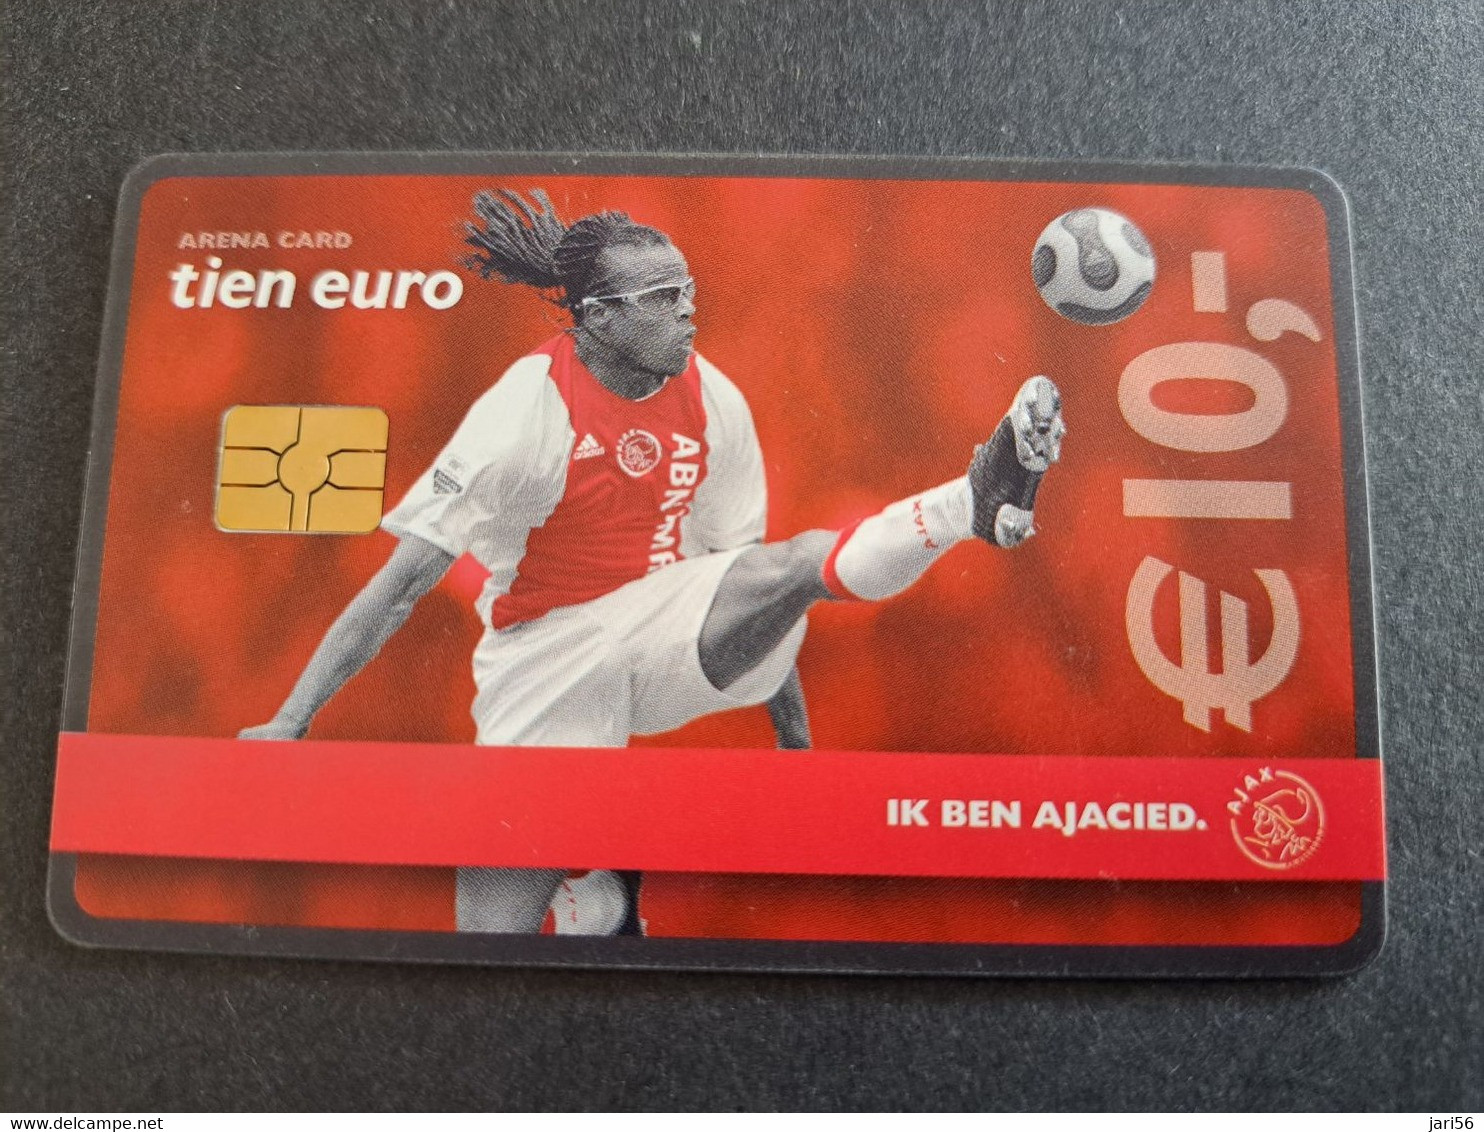 NETHERLANDS  ARENA CARD FOOTBAL/SOCCER  AJAX AMSTERDAM   EDGAR DAVIDS   €10,- USED CARD  ** 10373** - Publiques